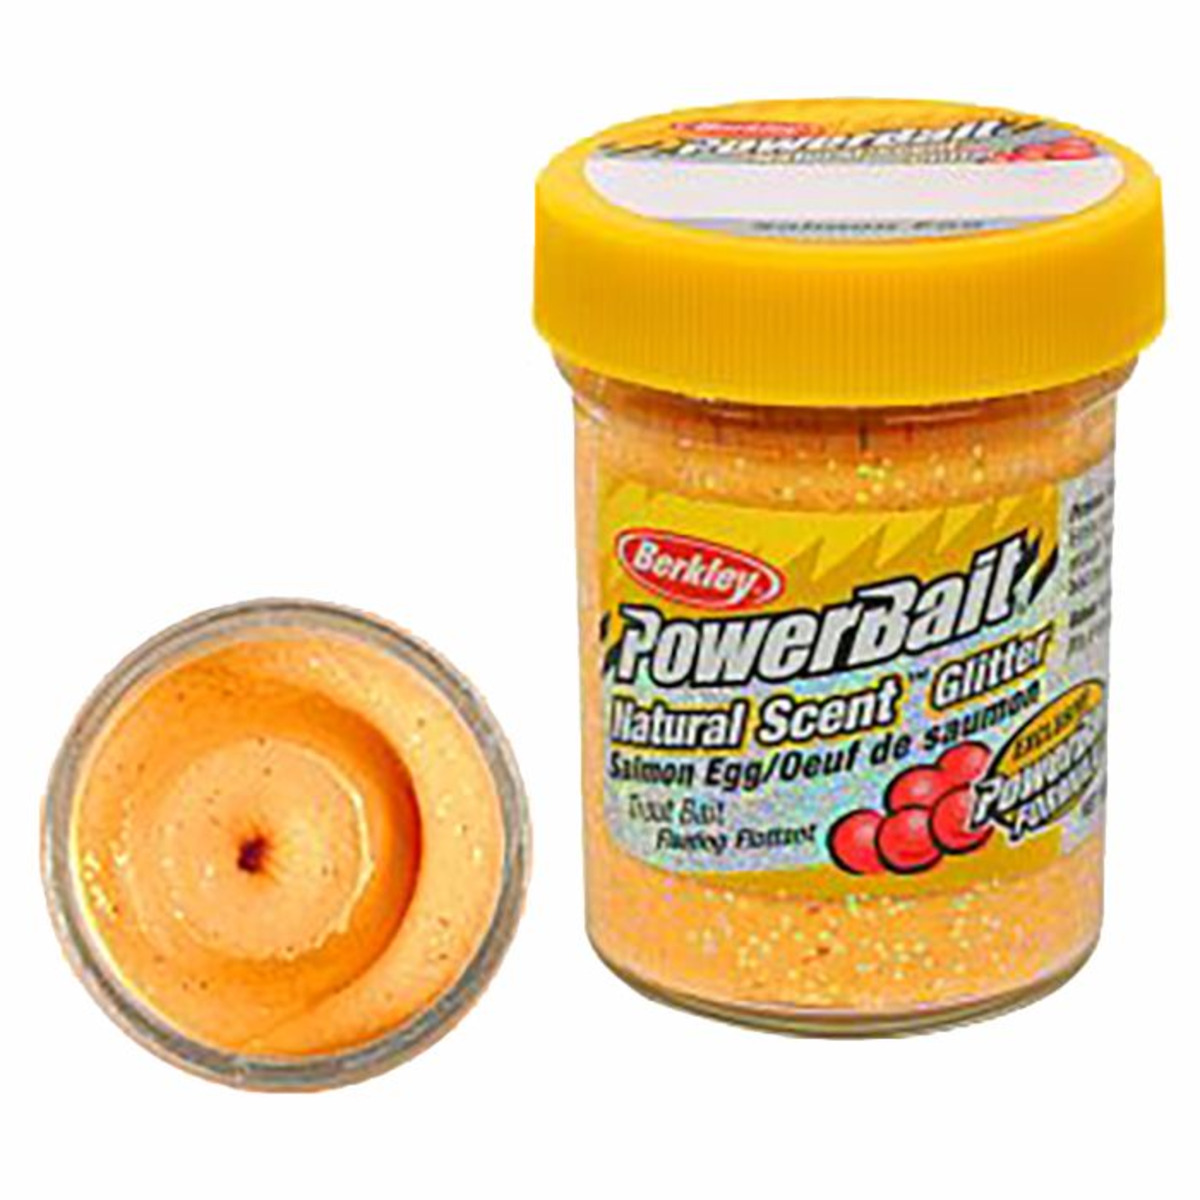 https://media.piscor.com/img/p/xl/berkley-pasta-trota-powerbait-natural-scent-salmon-egg-peach-15356.jpg